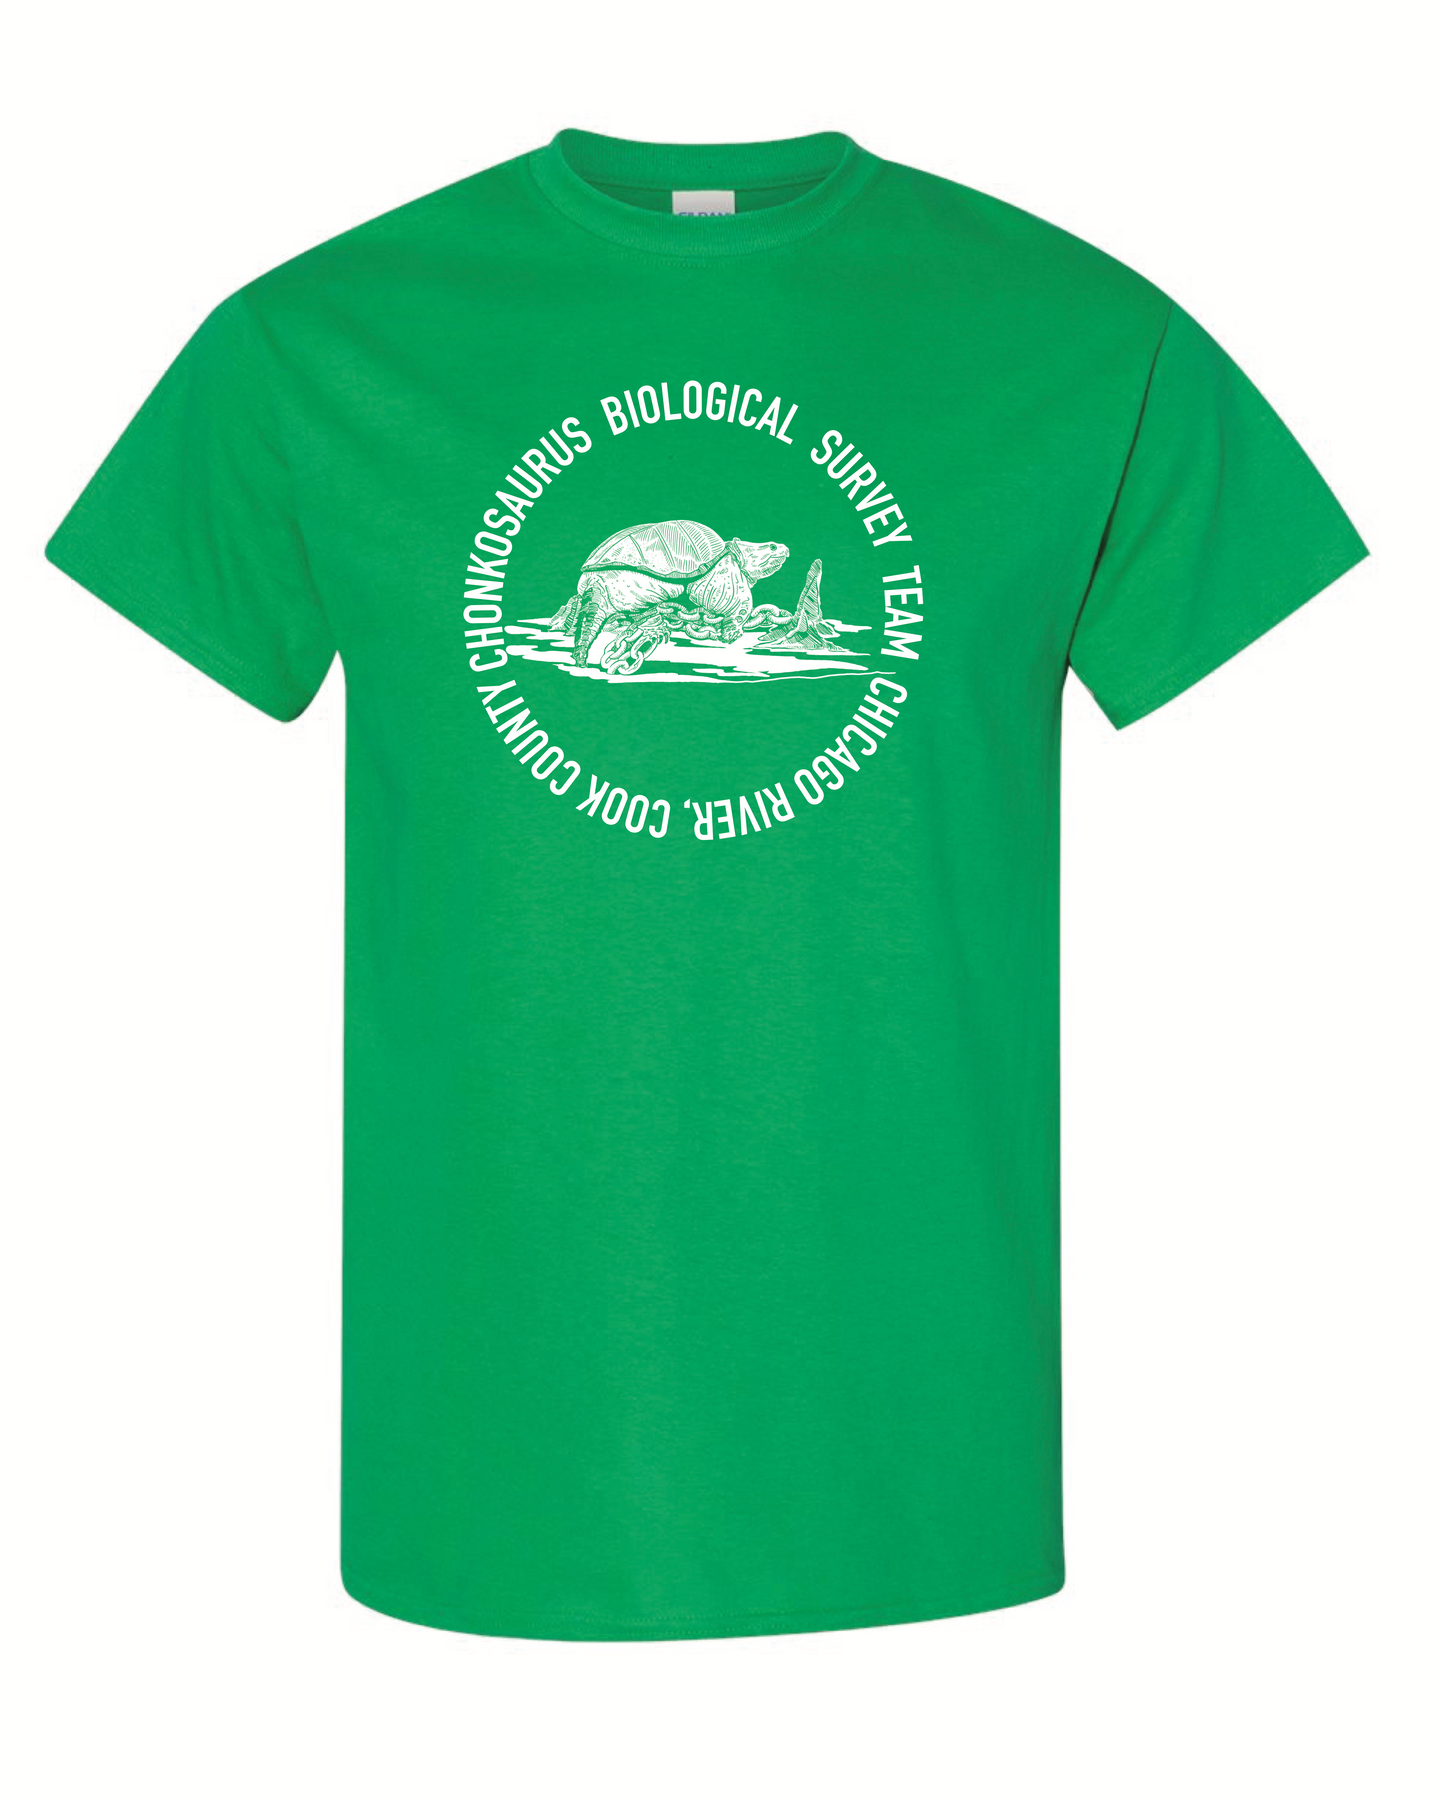 Chonkosaurus Bio Survey Team - Short Sleeve T-Shirt- Irish Green - Unisex